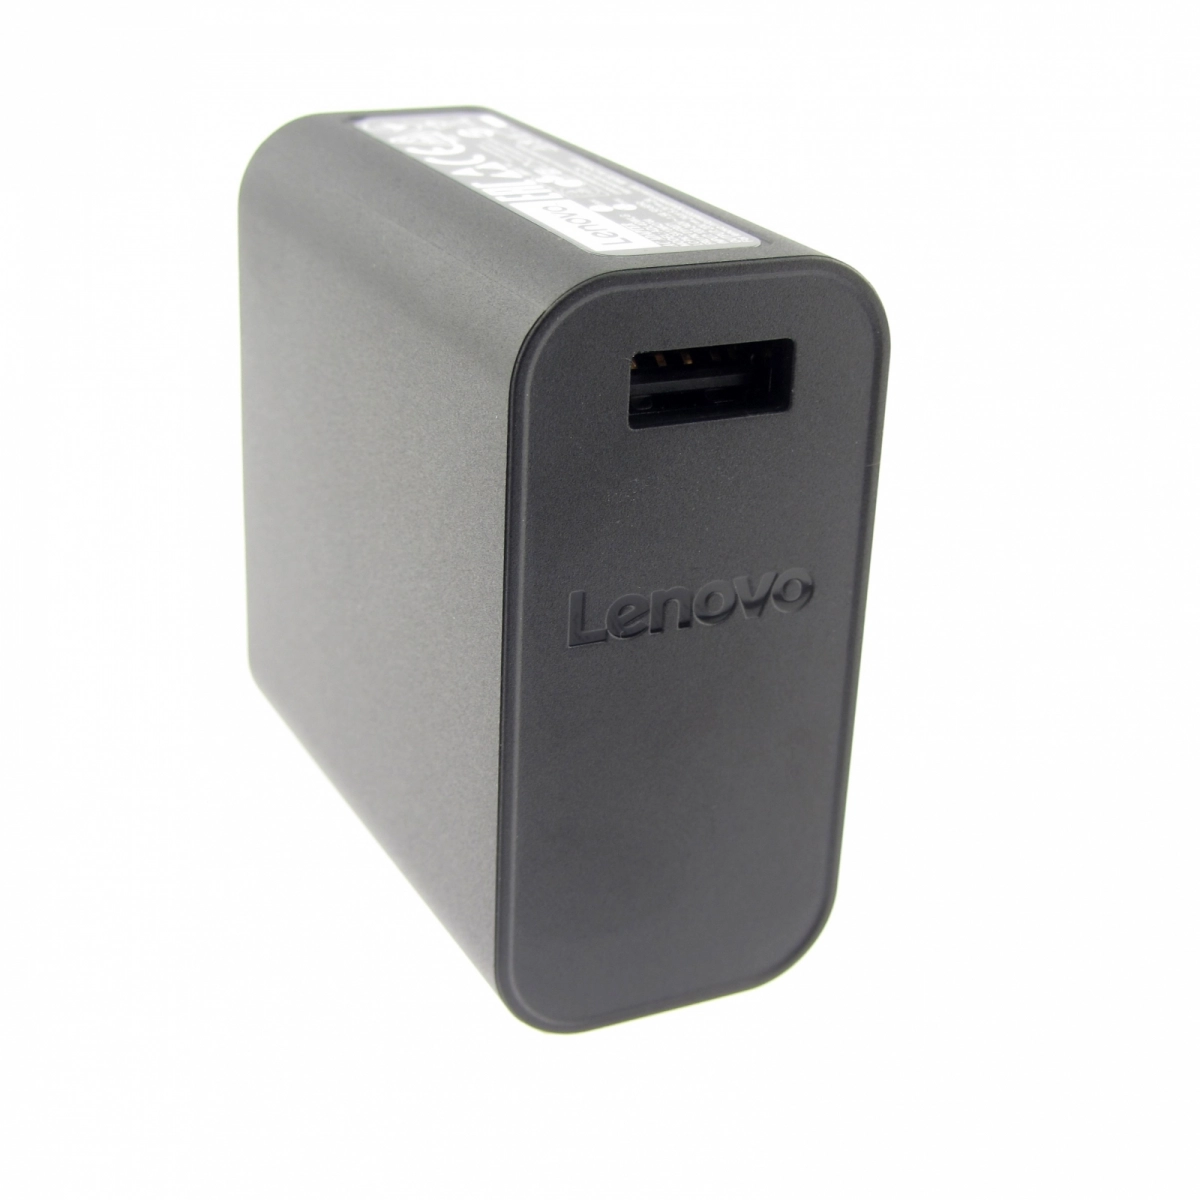 Original Netzteil für LENOVO Delta ADL40WLG, 20V, 2A, Stecker USB, ohne USB-Kabel